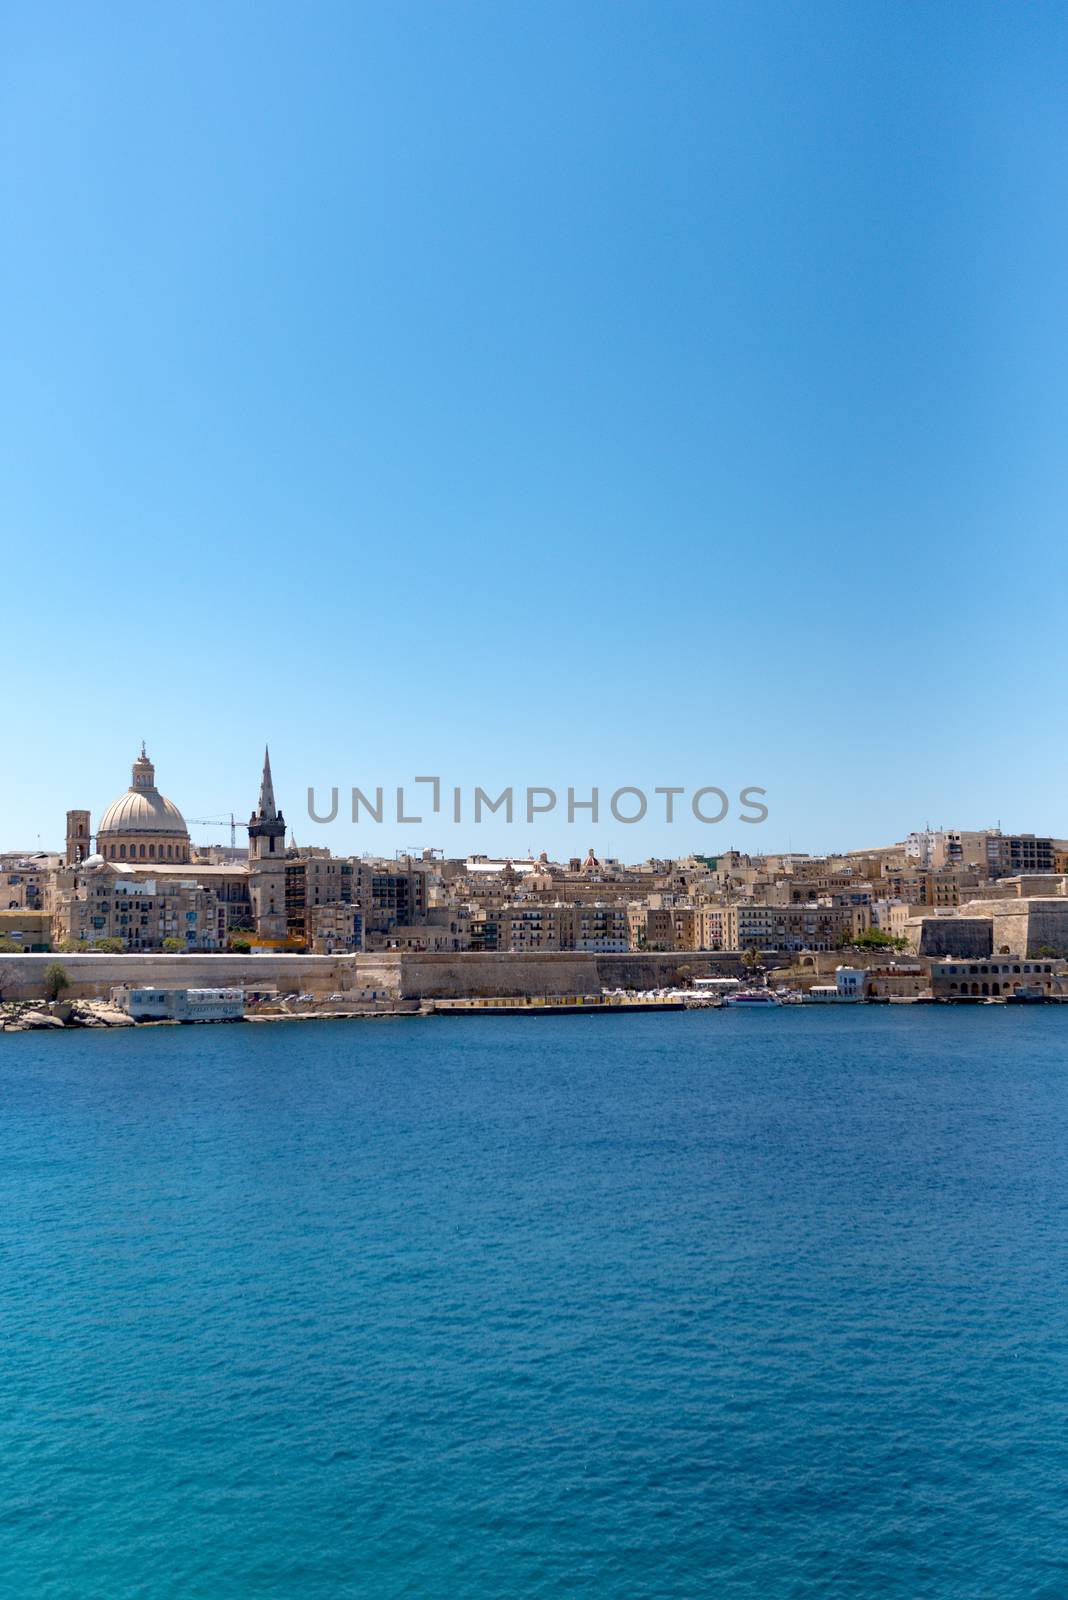 Sliema azure harbour with yachts, Malta,.